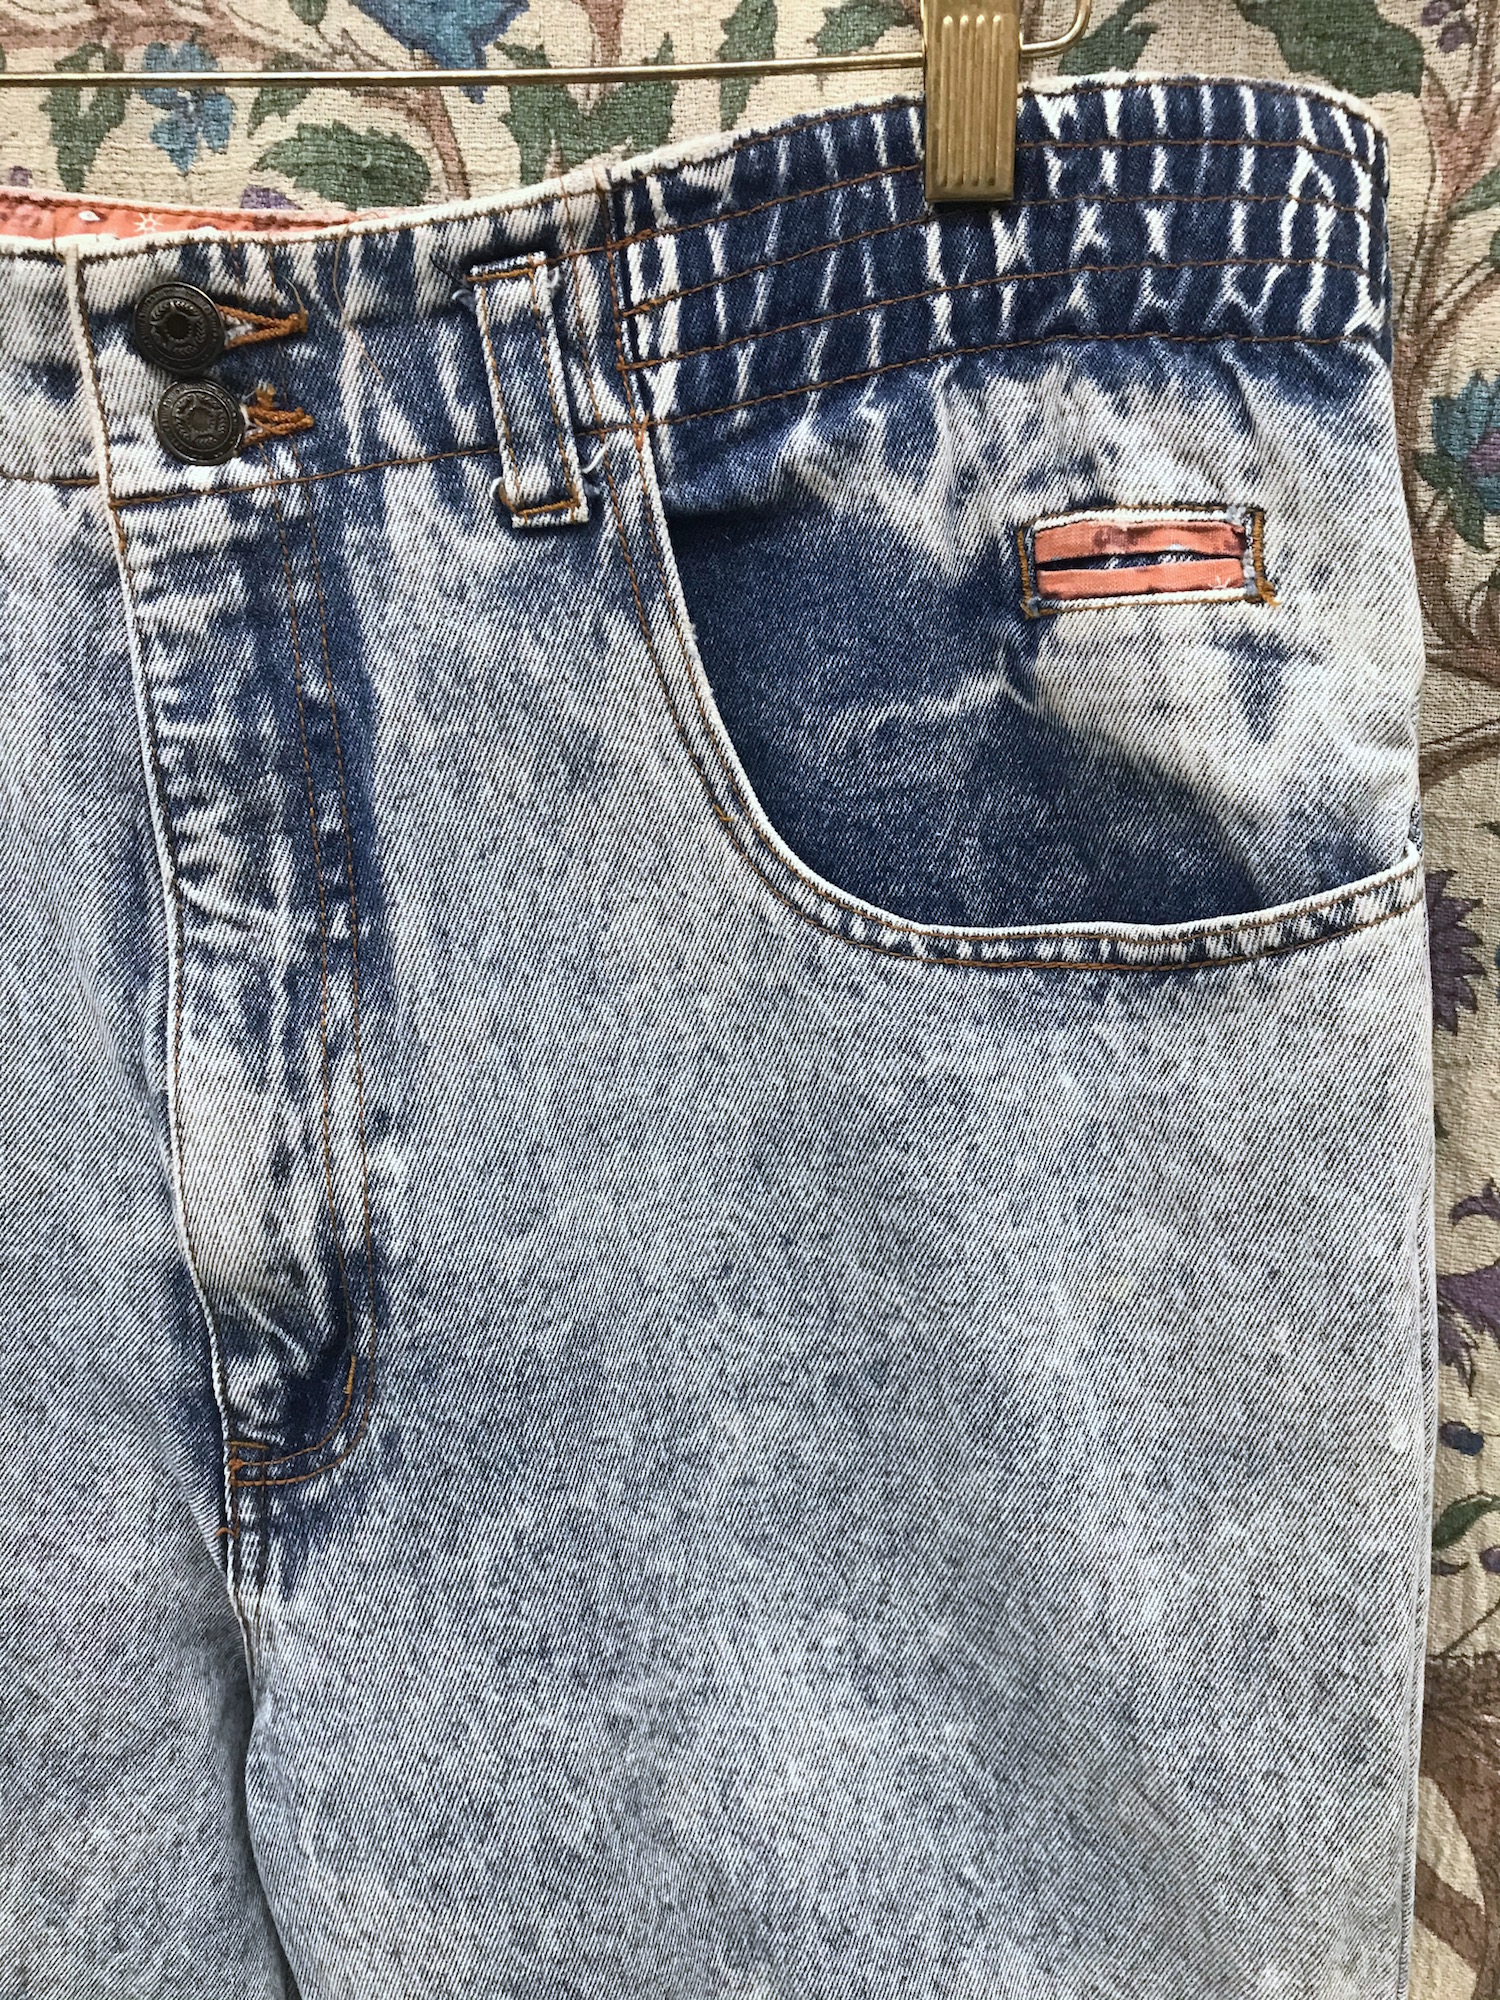 Vintage 80's Acid Wash Jeans - Tucson Thrift Shop